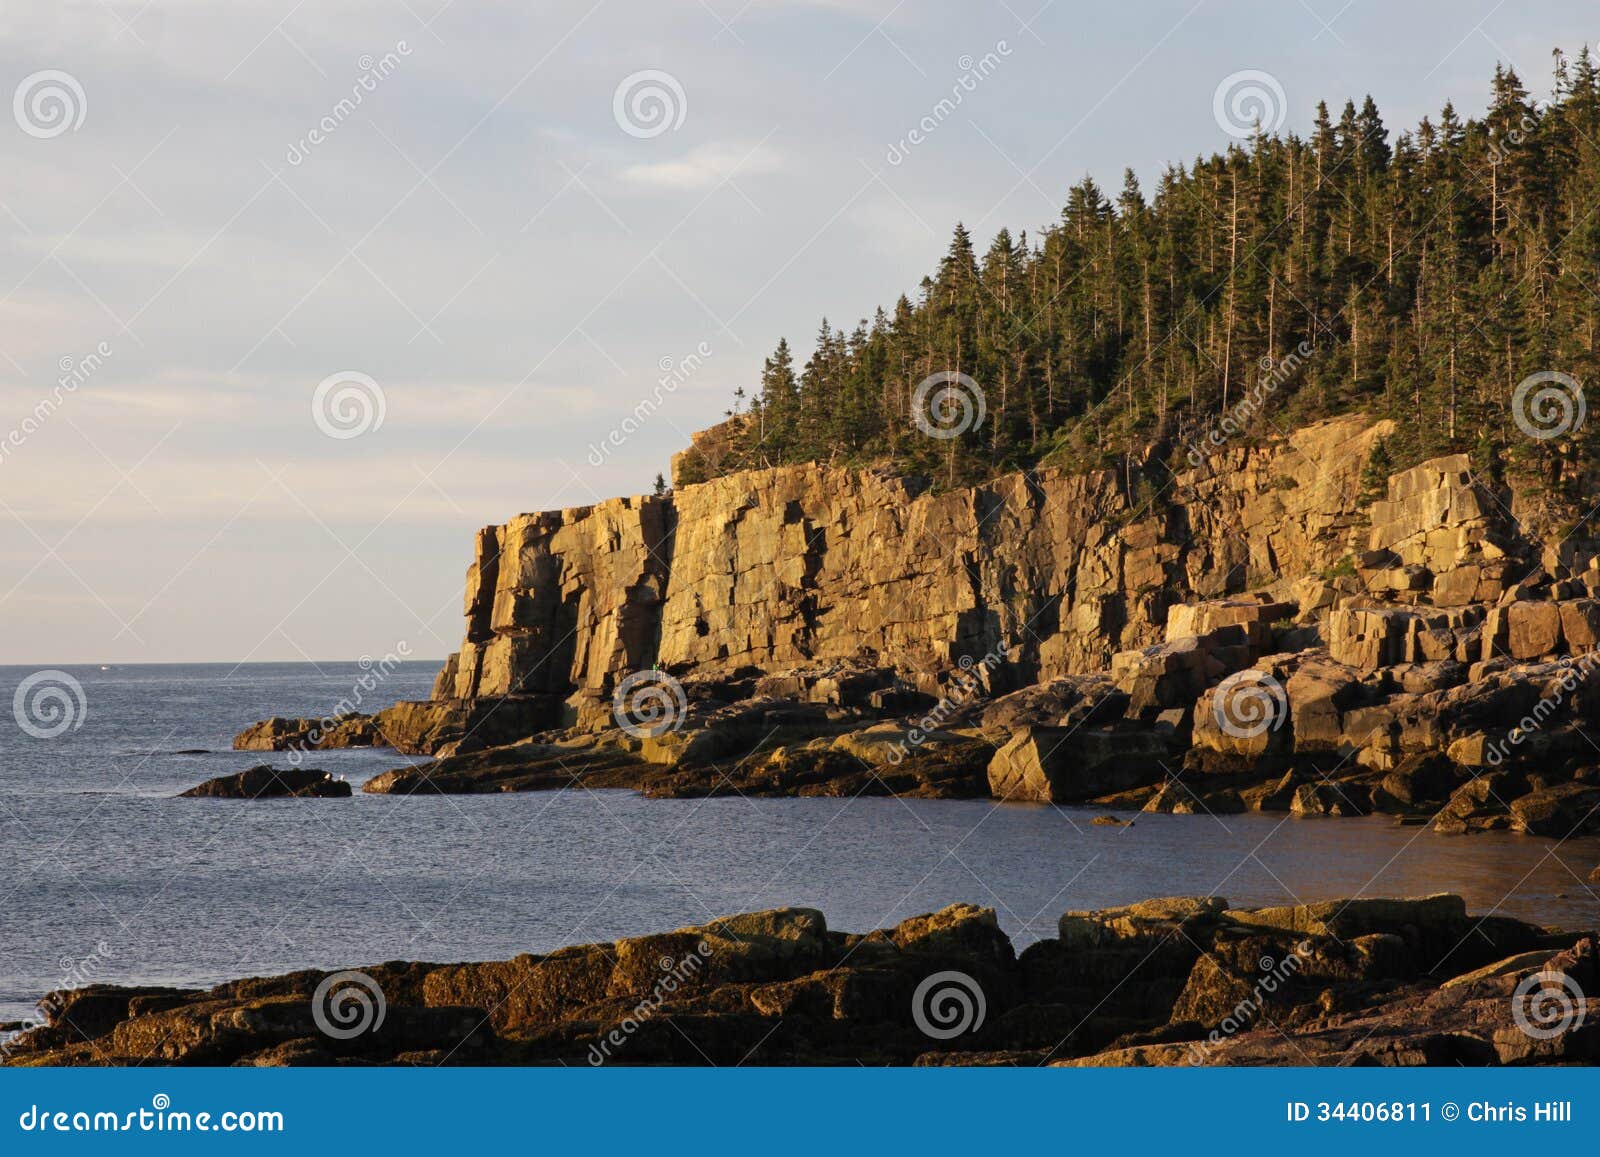 otter cliff at day break